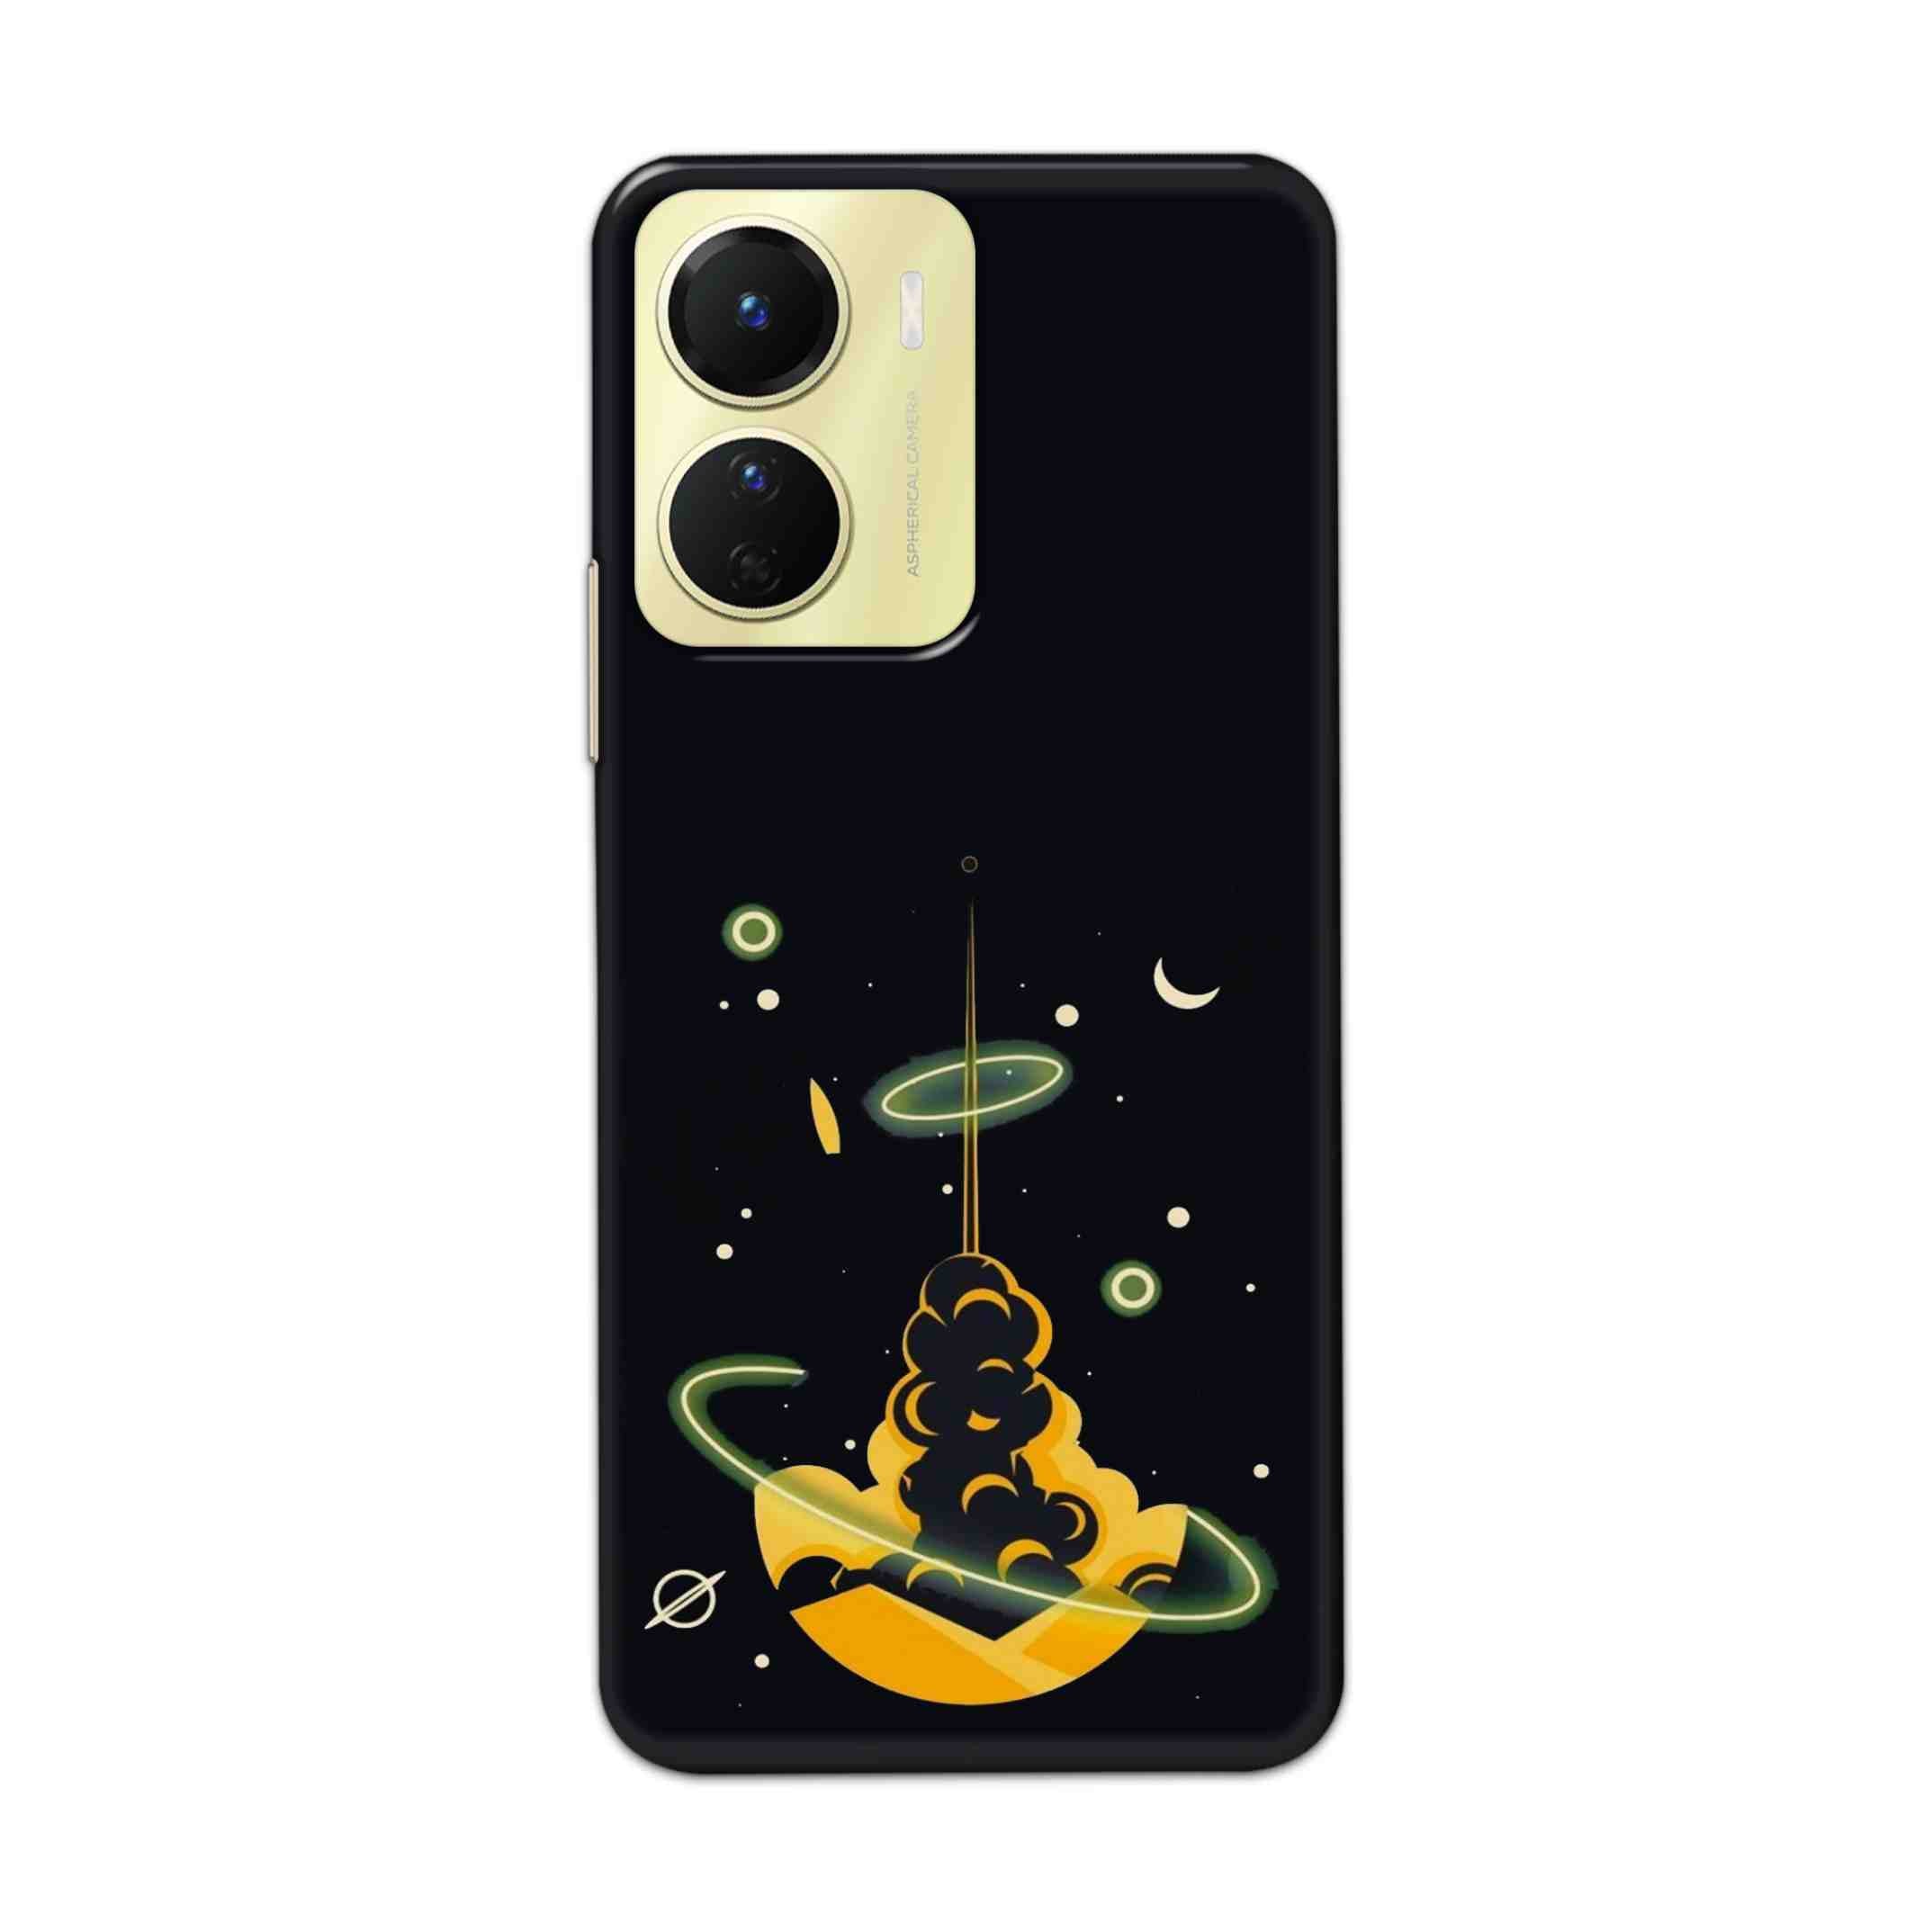 Buy Moon Hard Back Mobile Phone Case Cover For Vivo Y16 Online